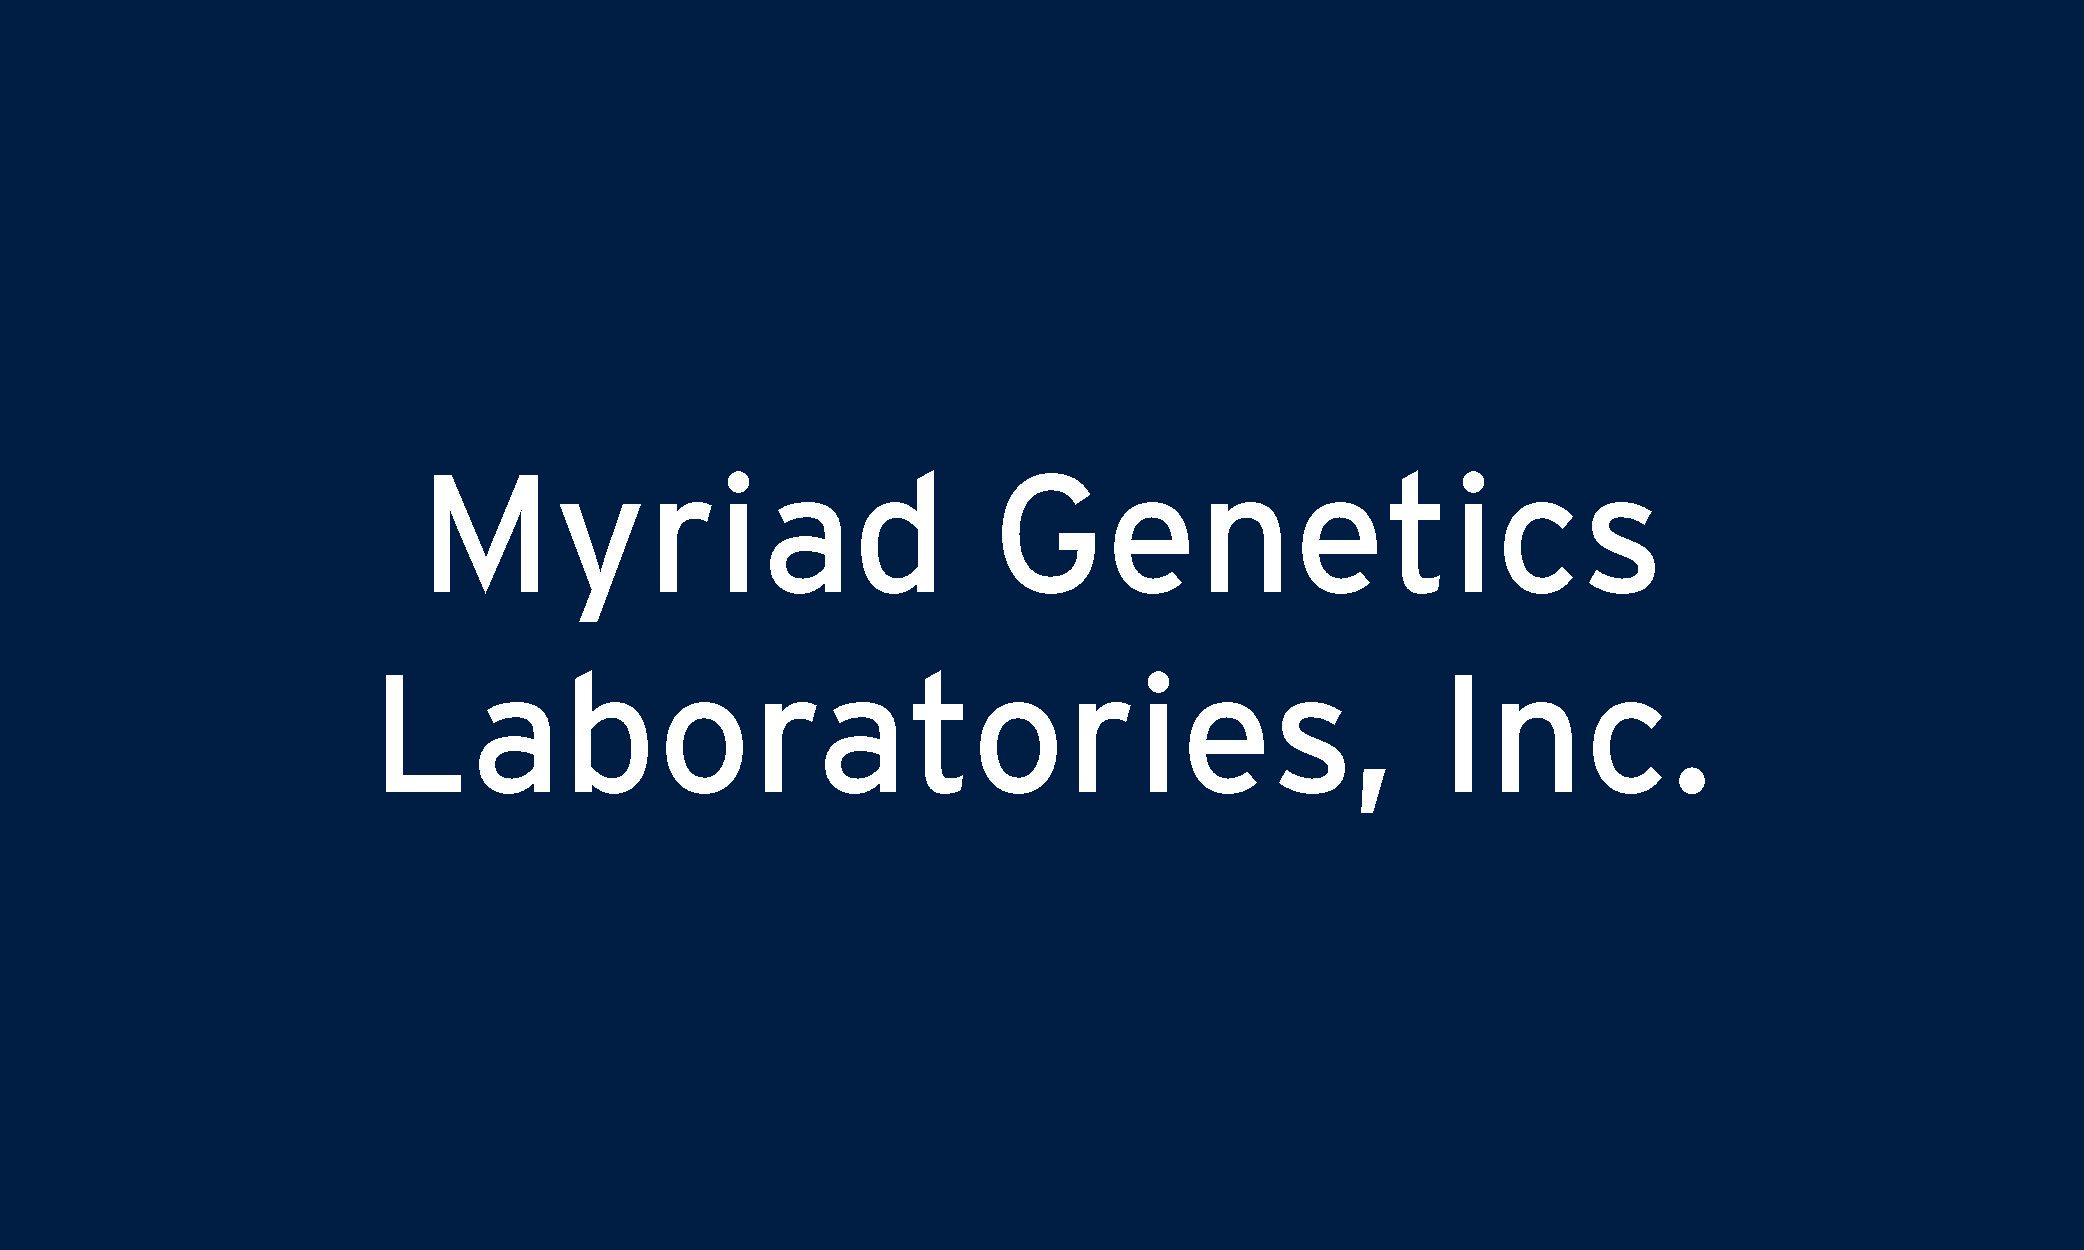 Myriad Genetics Laboratories, Inc. 